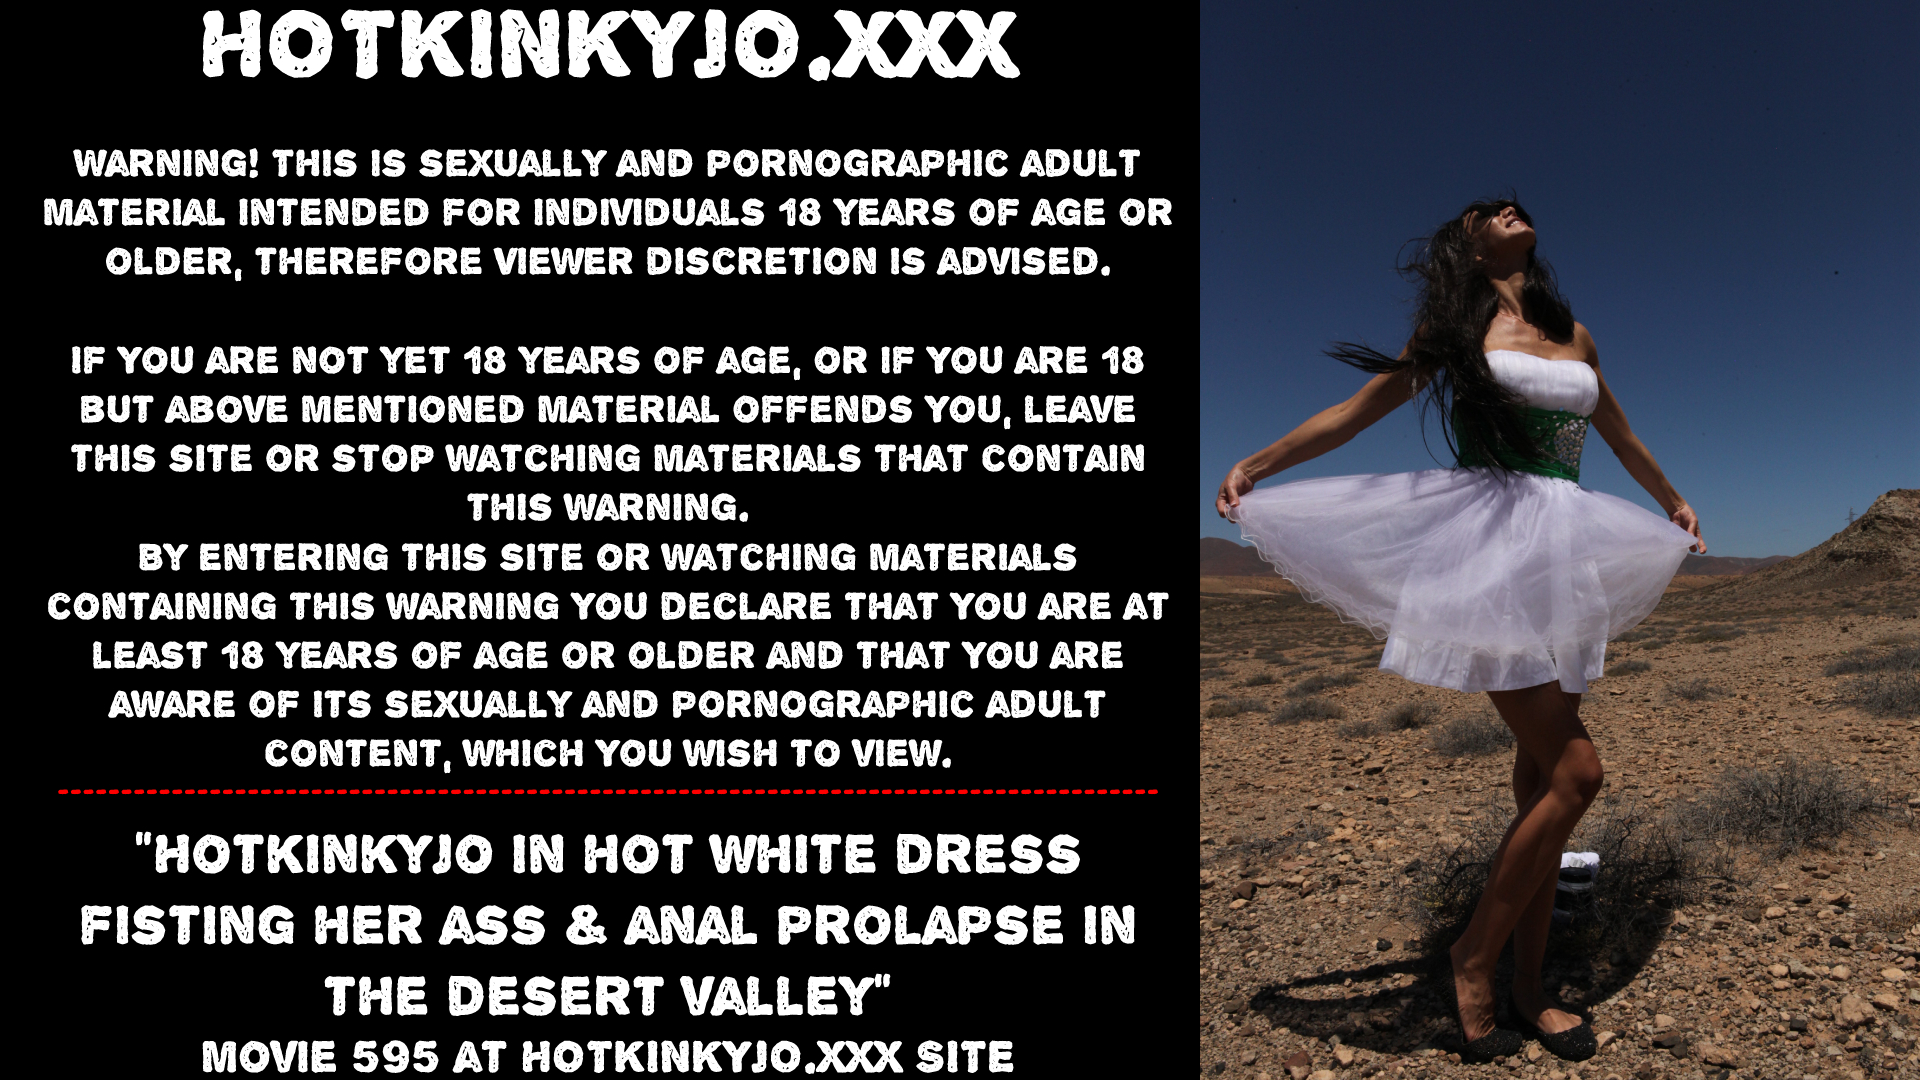 Hotkinkyjo in hot white dress fisting anal prolapse